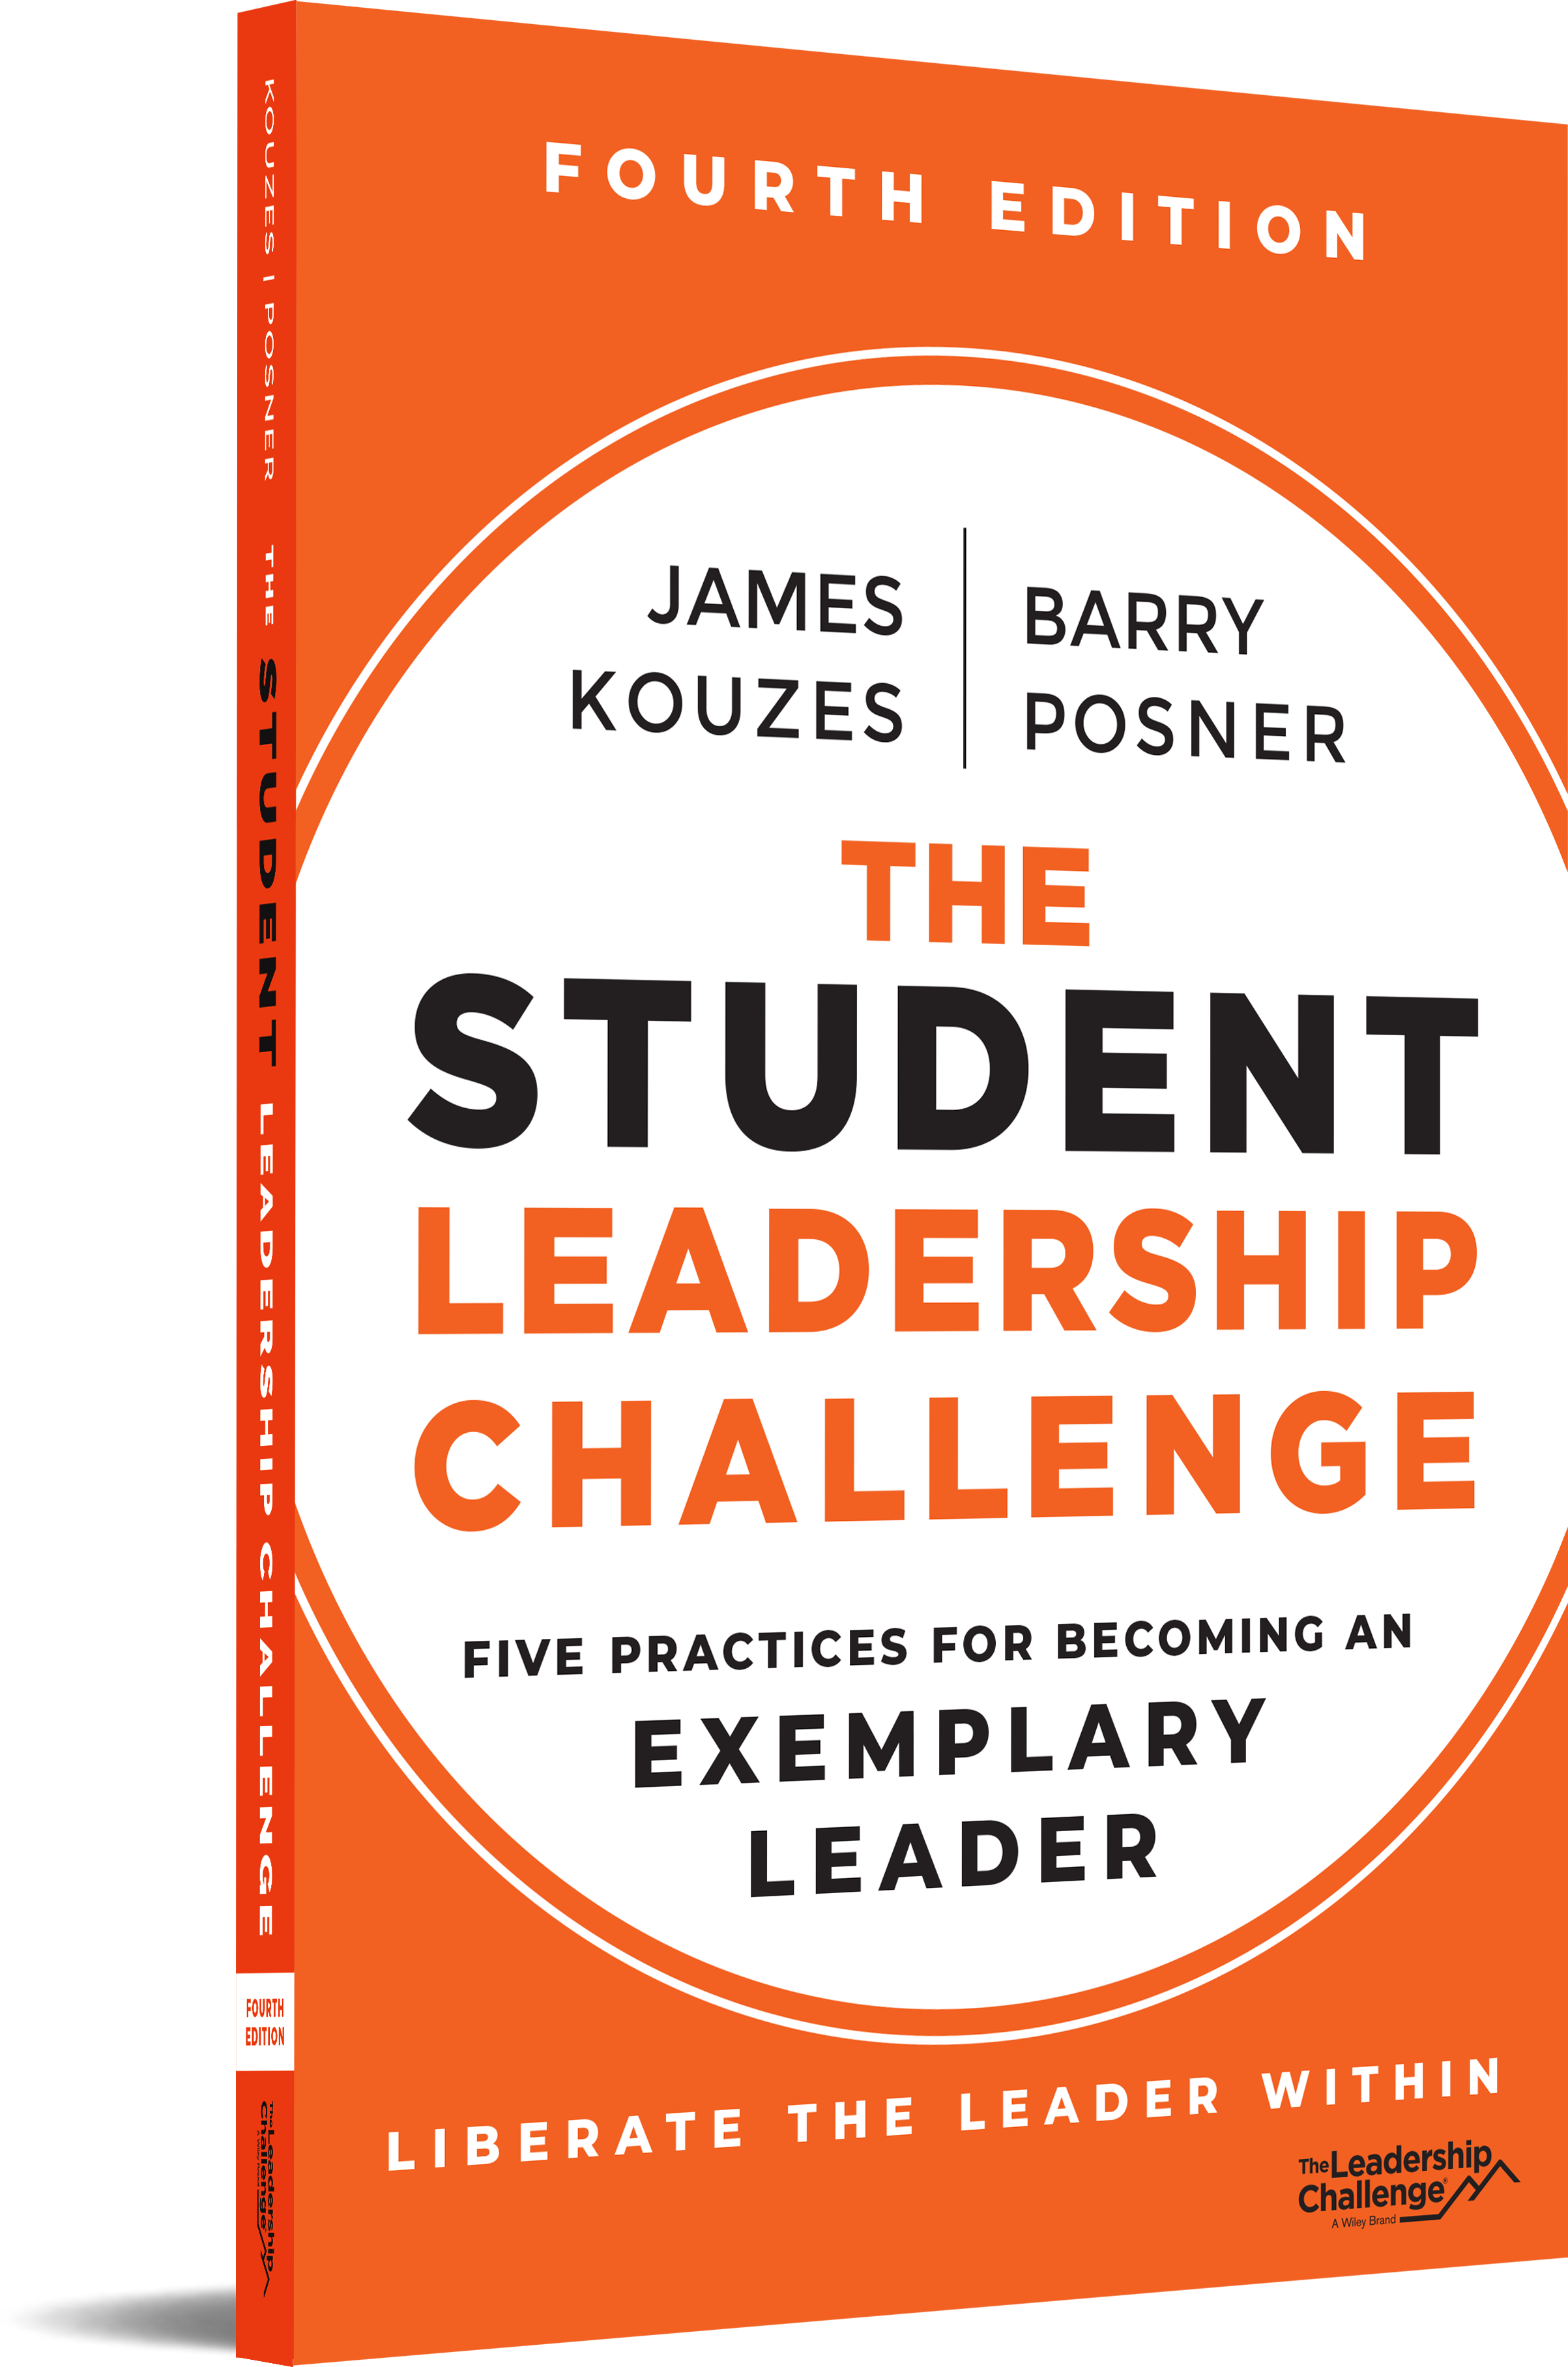 Illustration of The Student Leadership Challenge facilitation materials